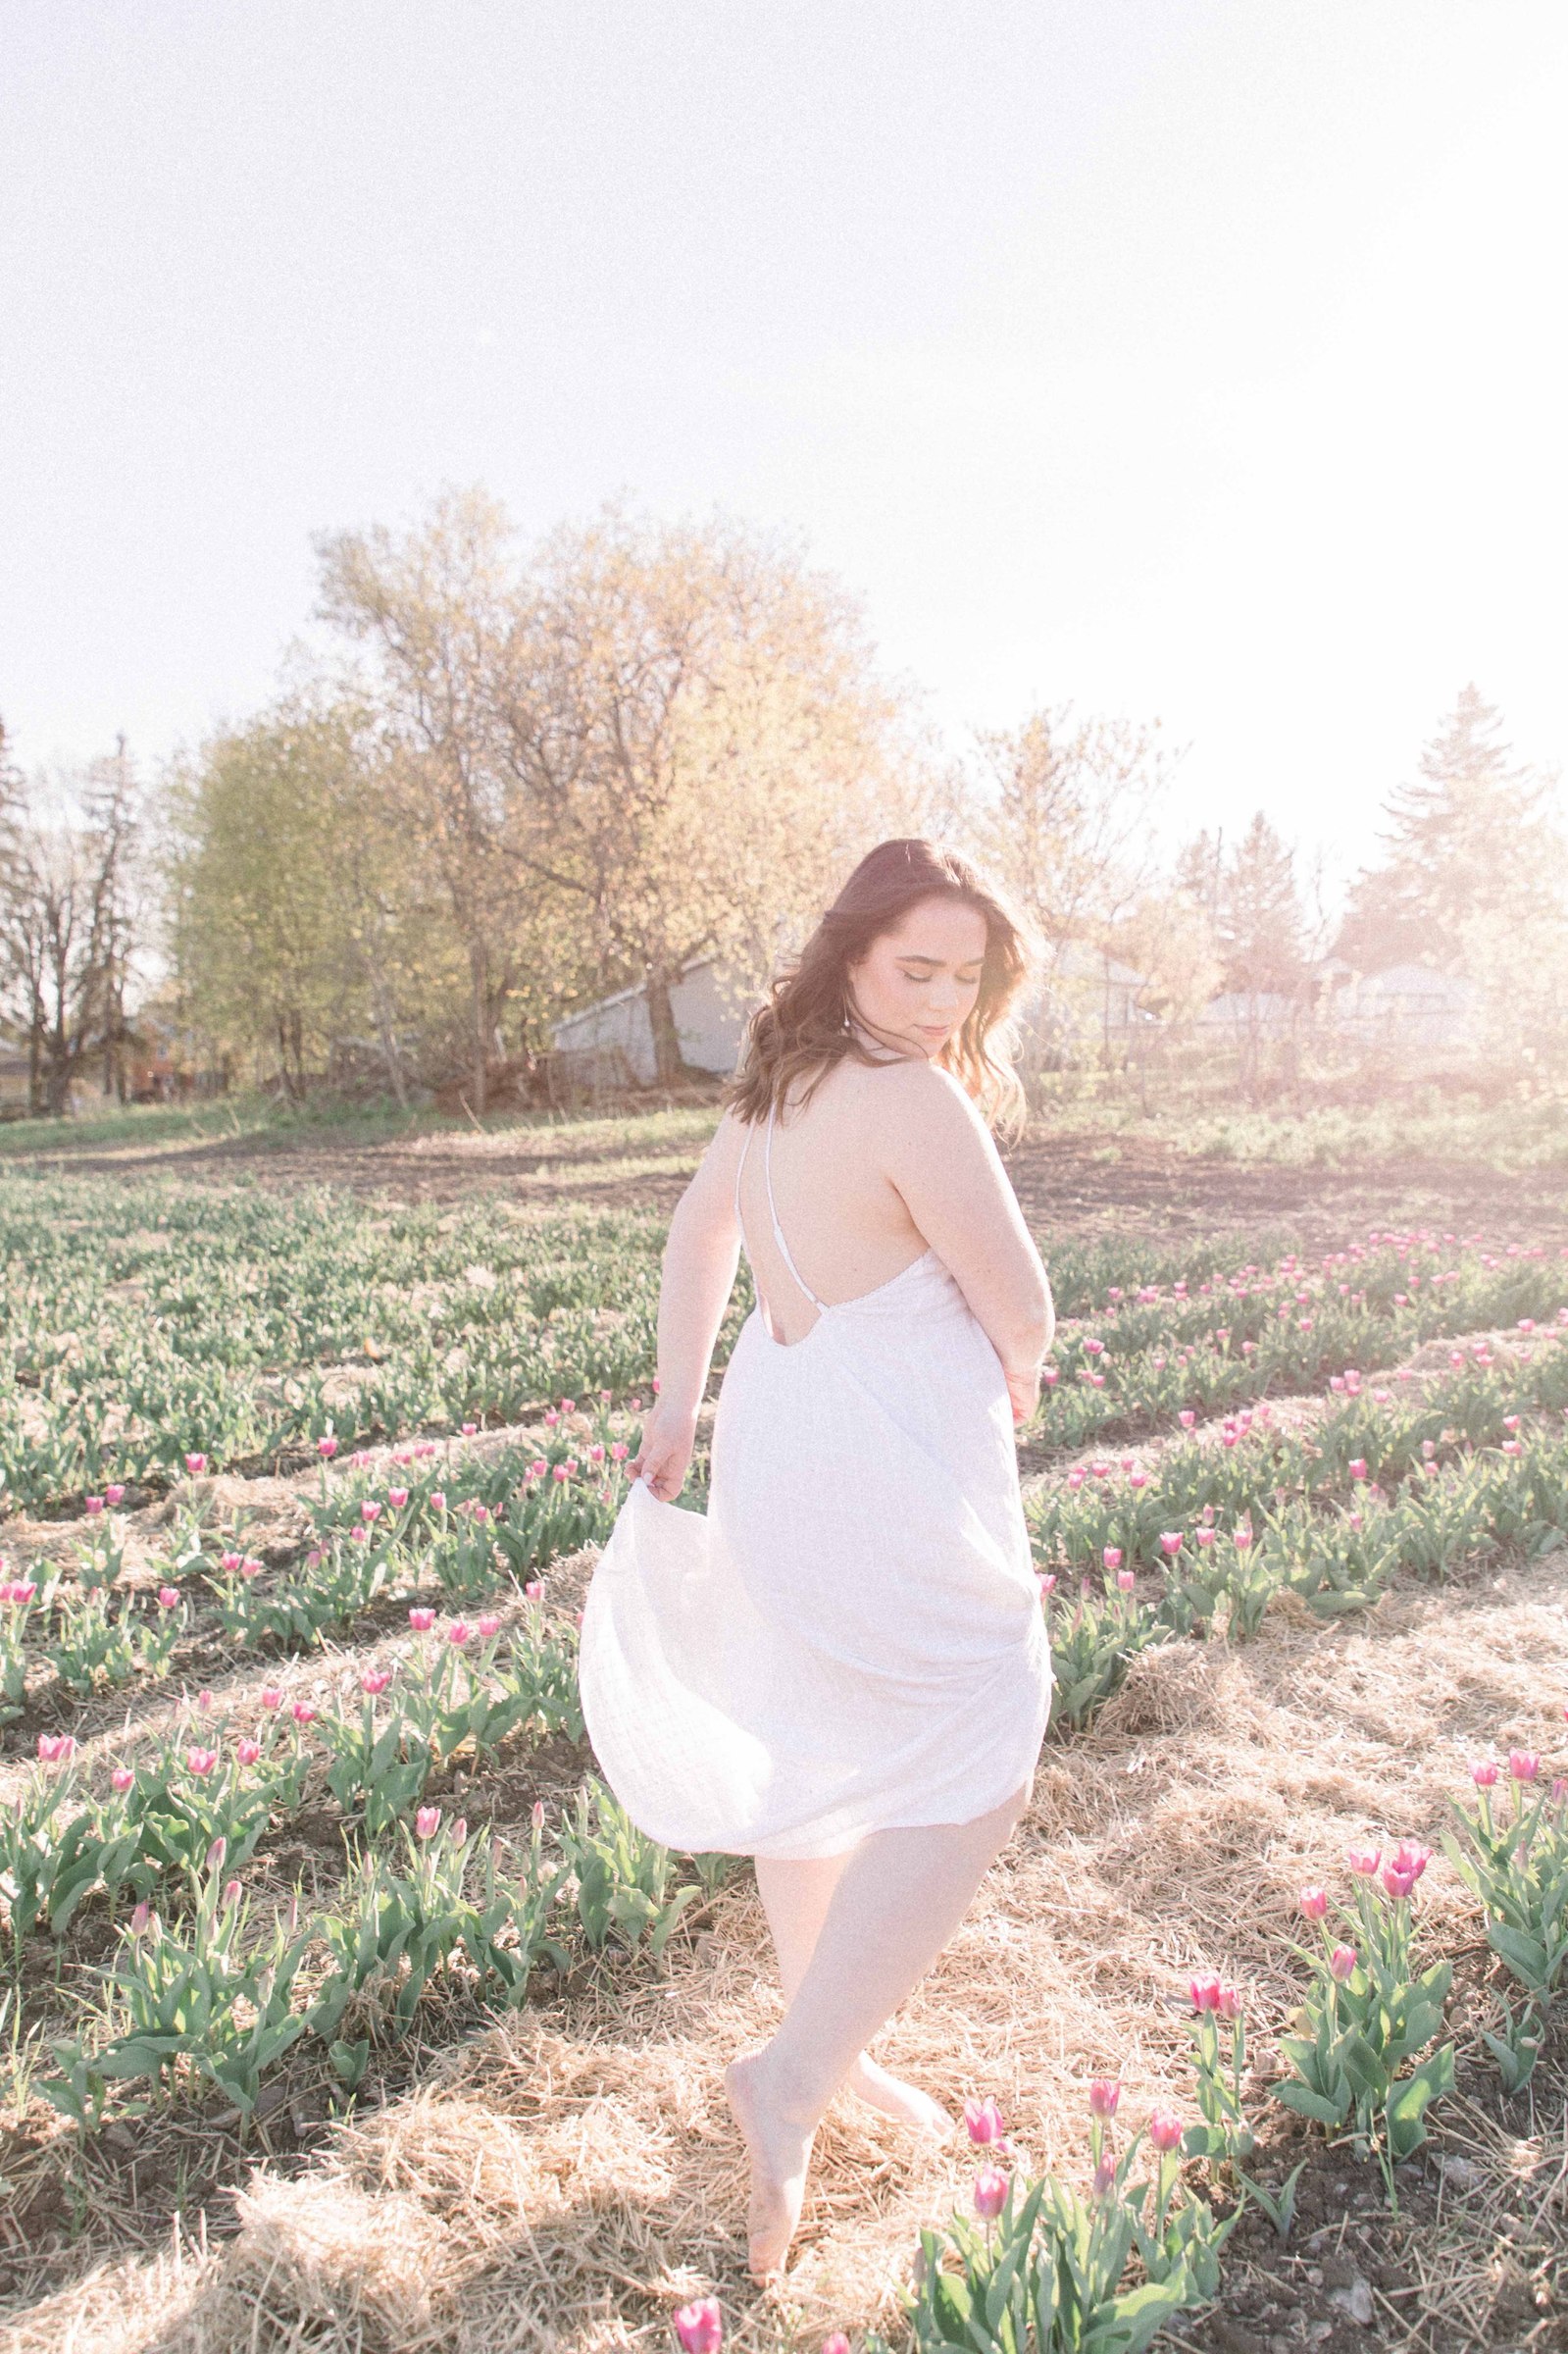 Portrait of a woman in a white dress dancing & twirling around in a tulip field. Vankleek Hill Portrait Photographer, L'Orignal, Champlain, Prescott-Russell, Family Photography, Candid Photography, Emily VanderBeek Photography.